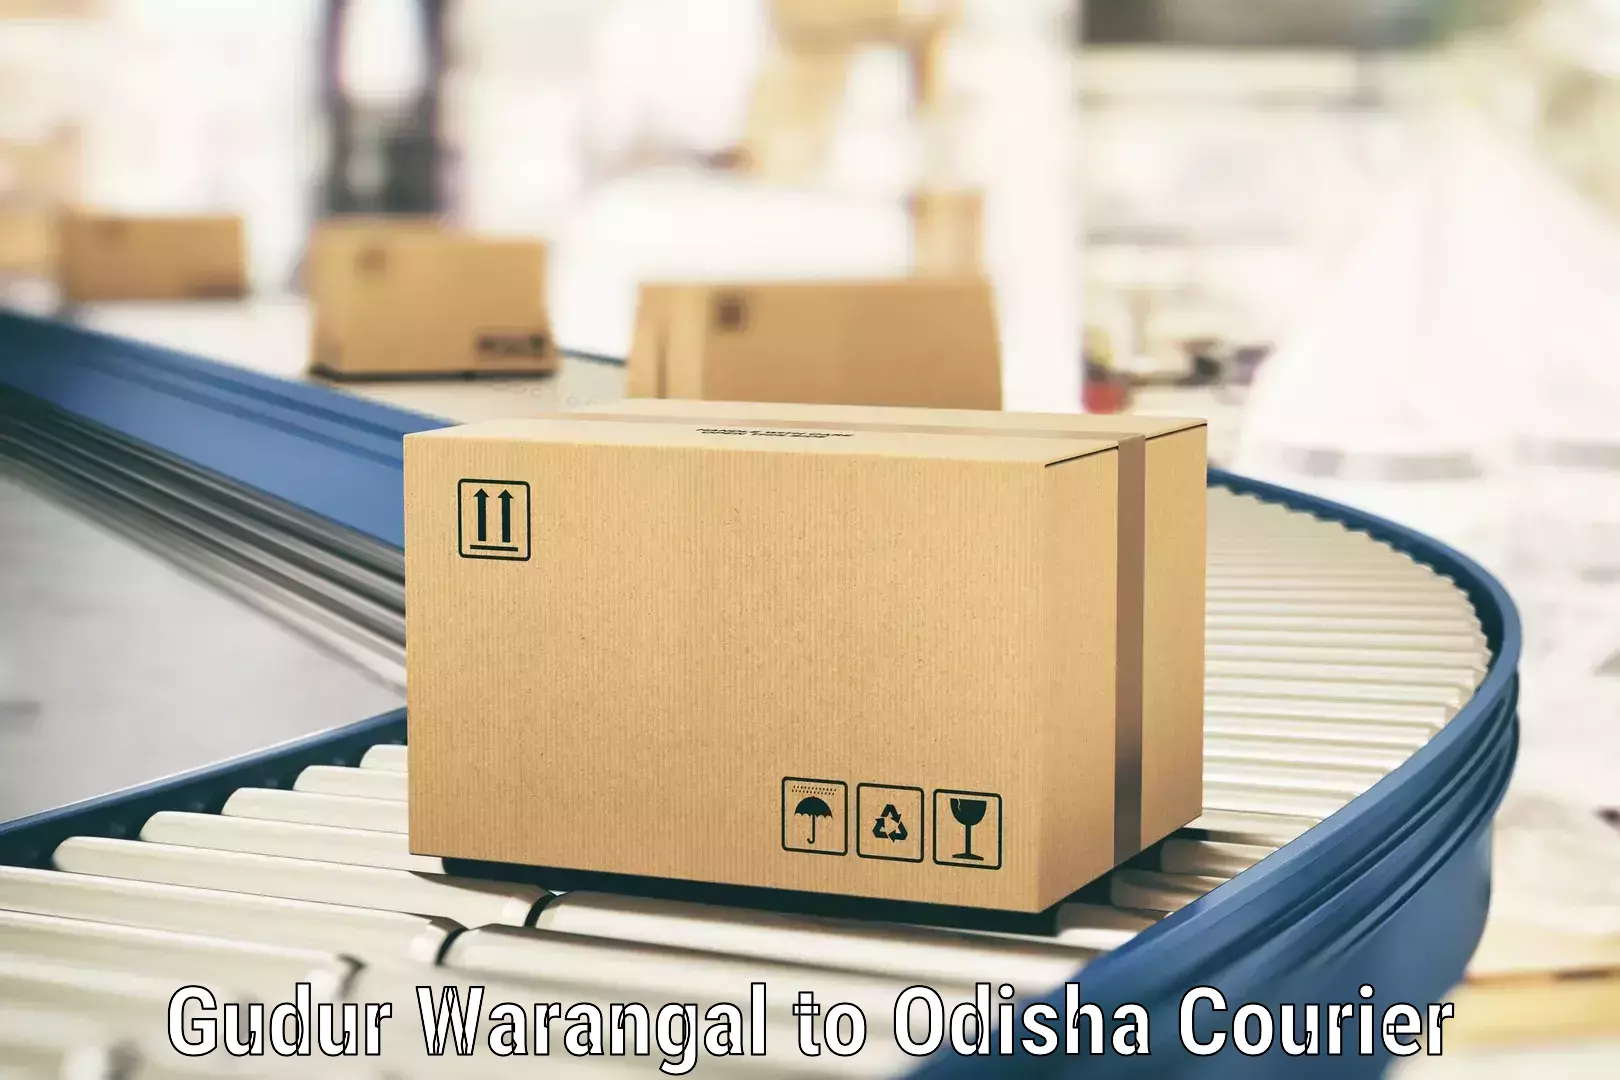 Global logistics network Gudur Warangal to Odisha